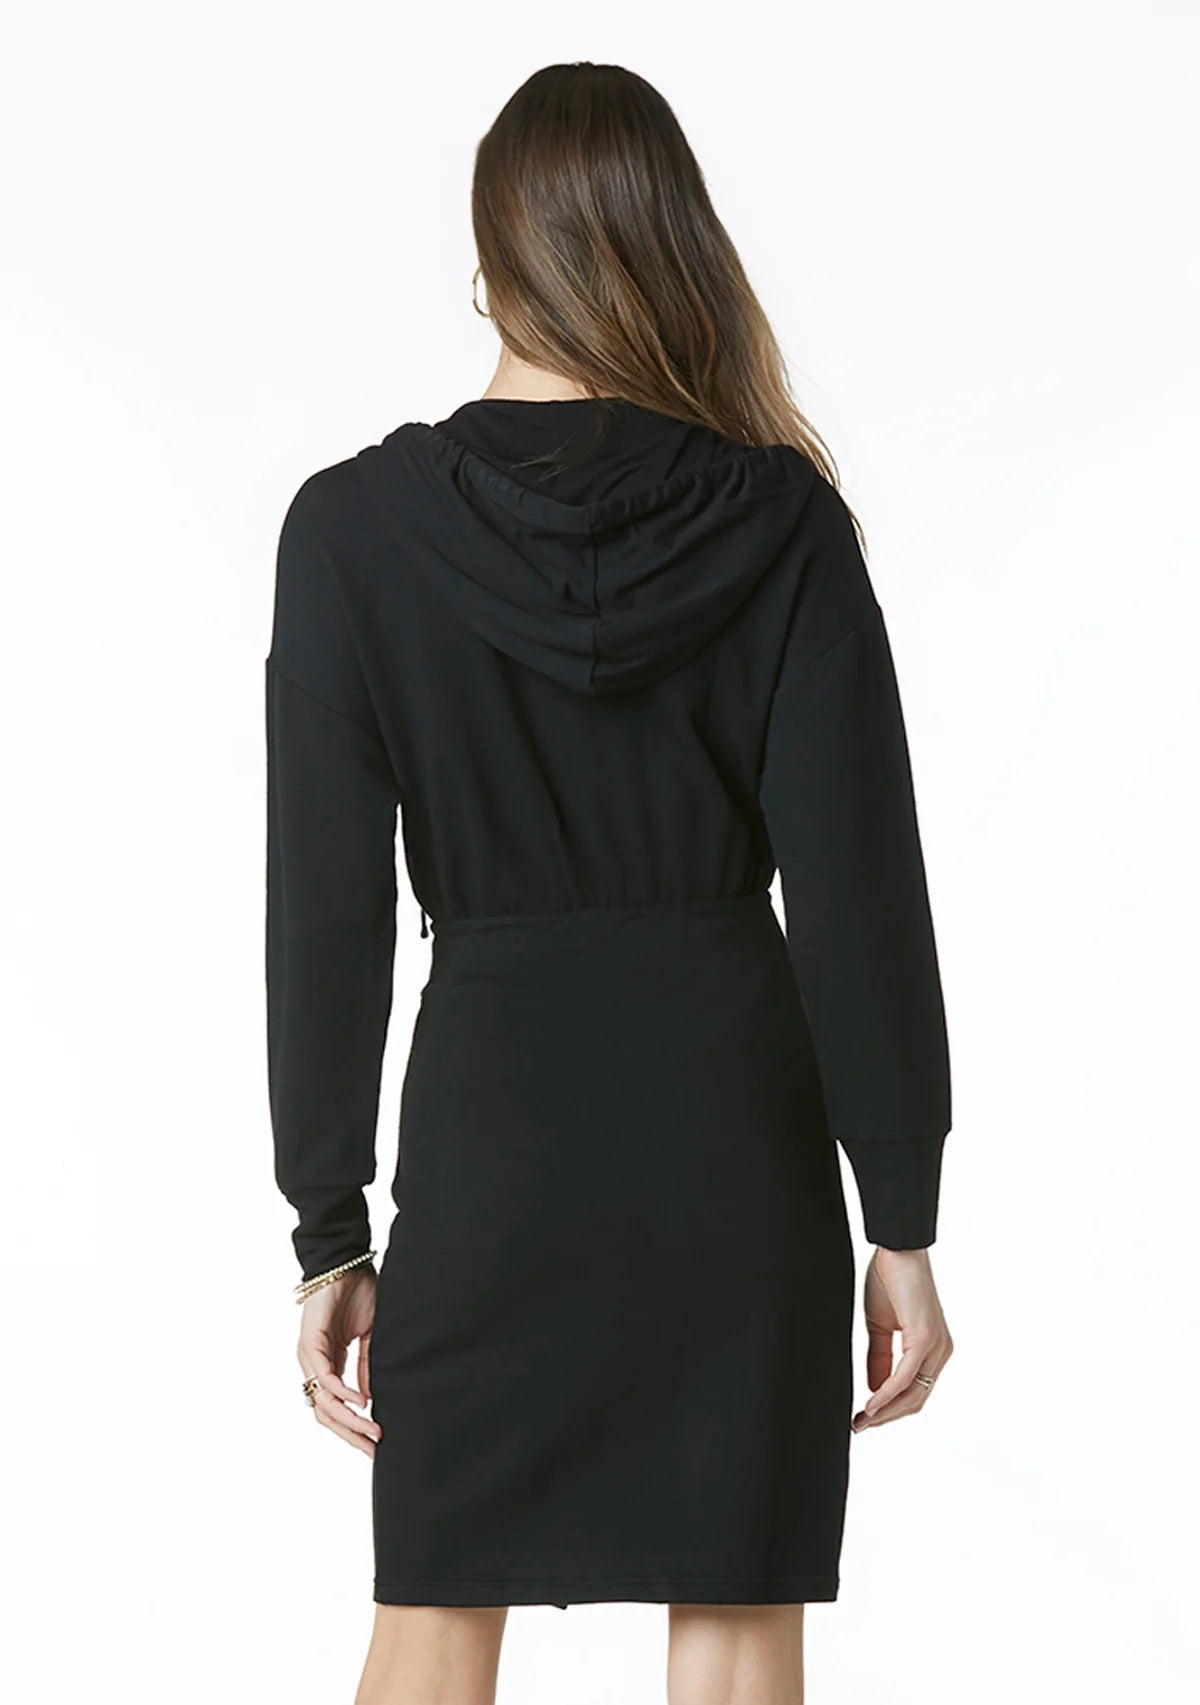 Tart Quixley Dress in Black - Estilo Boutique